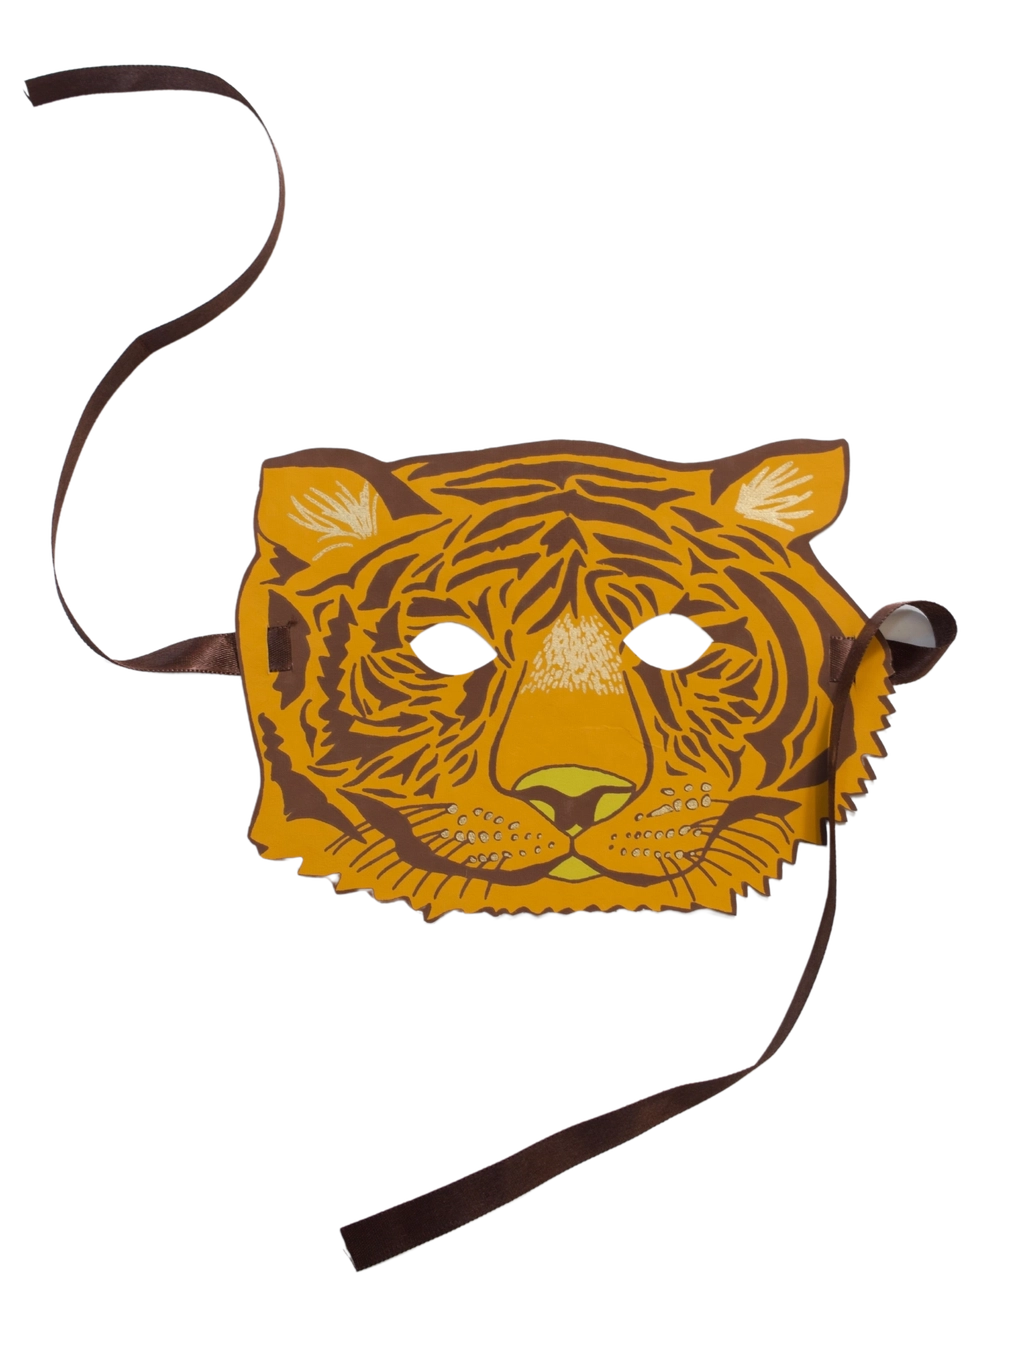 Tiger Mask Greeting Card